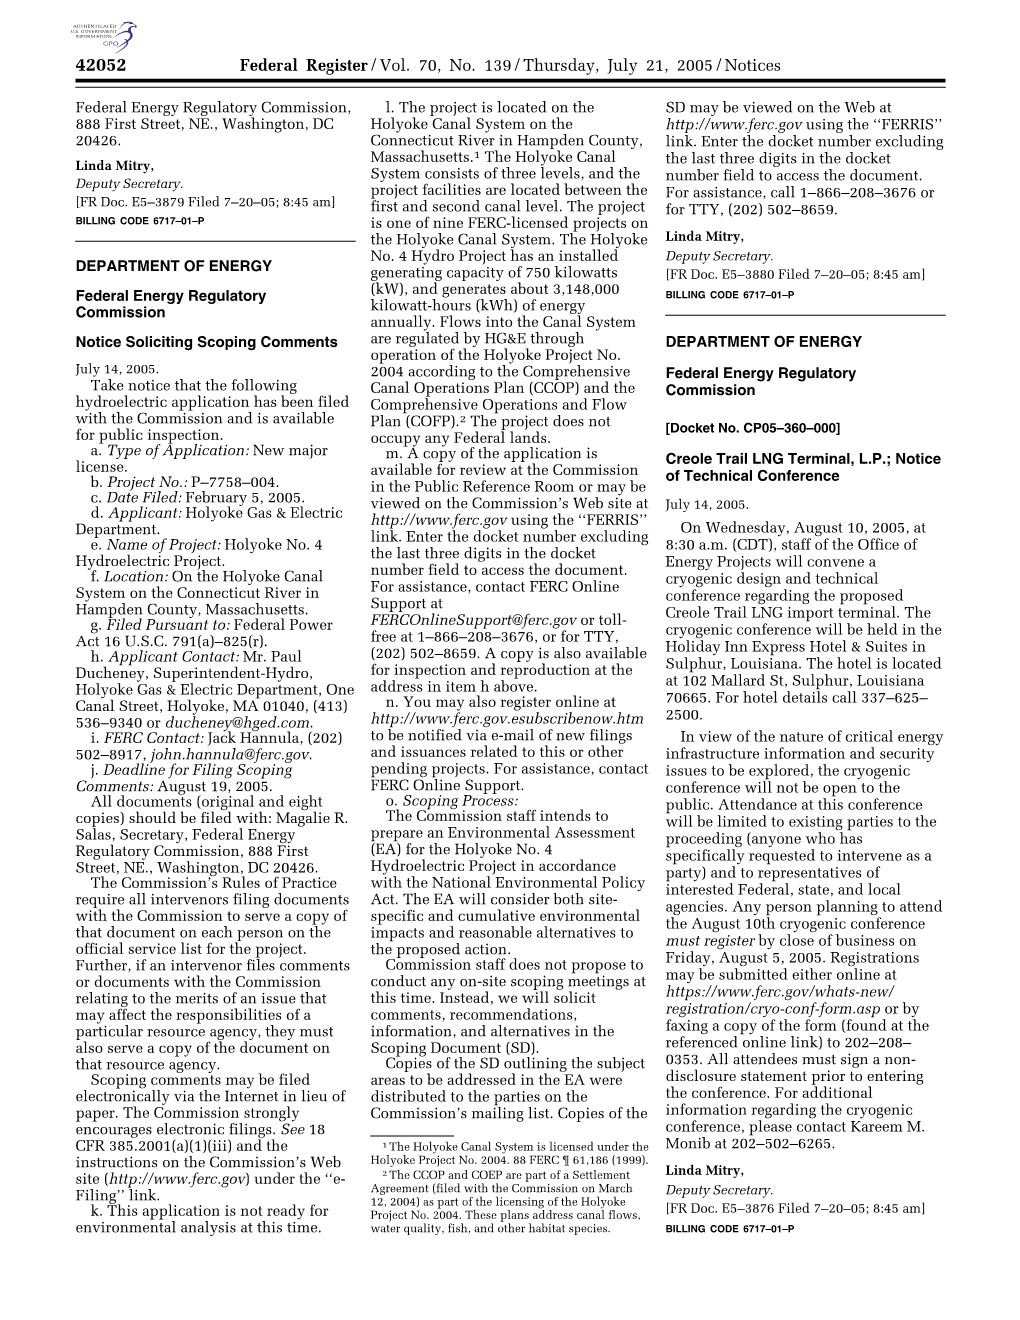 Federal Register/Vol. 70, No. 139/Thursday, July 21, 2005/Notices